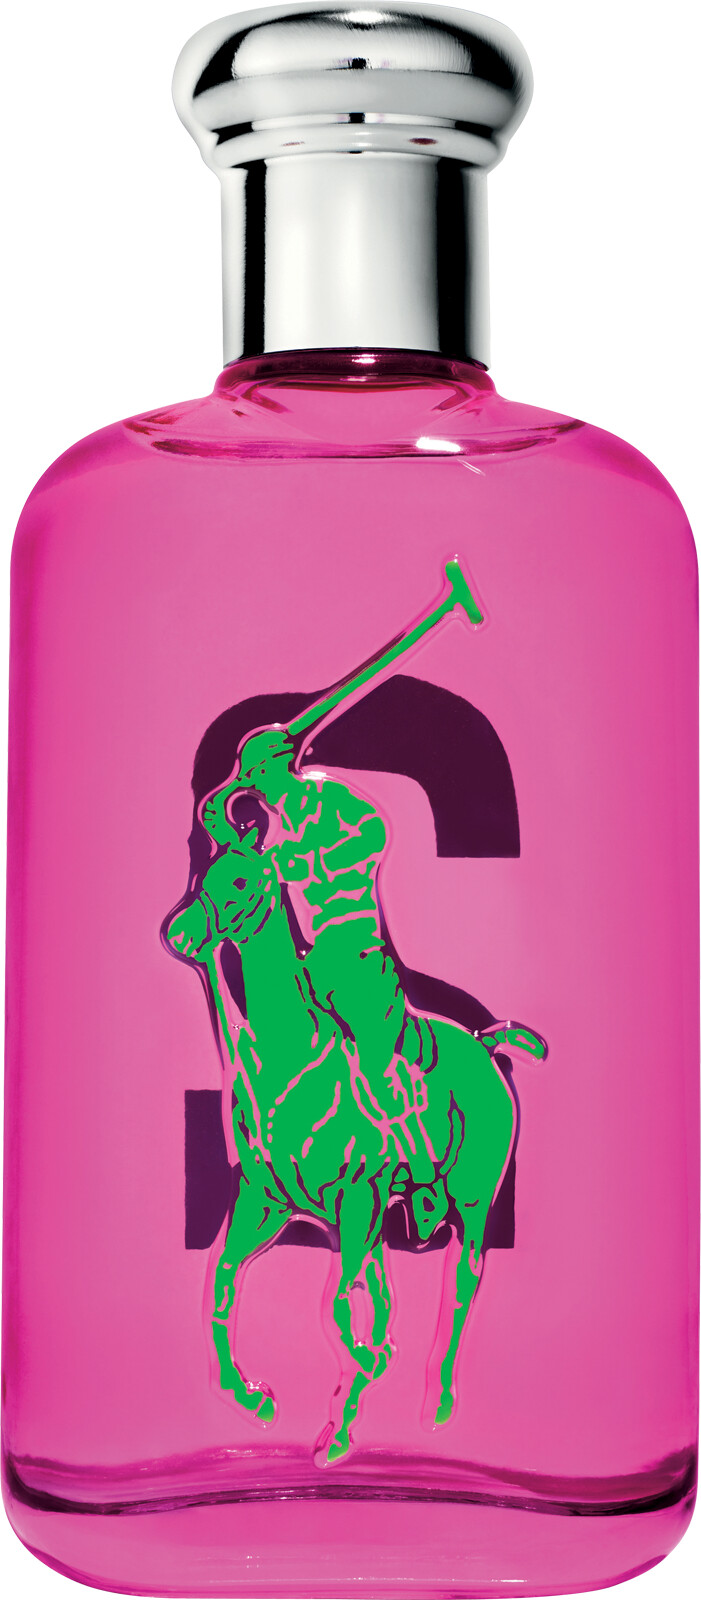 Ralph Lauren Big Pony Collection For Women 2 - Pink Eau de Toilette Spray 50ml